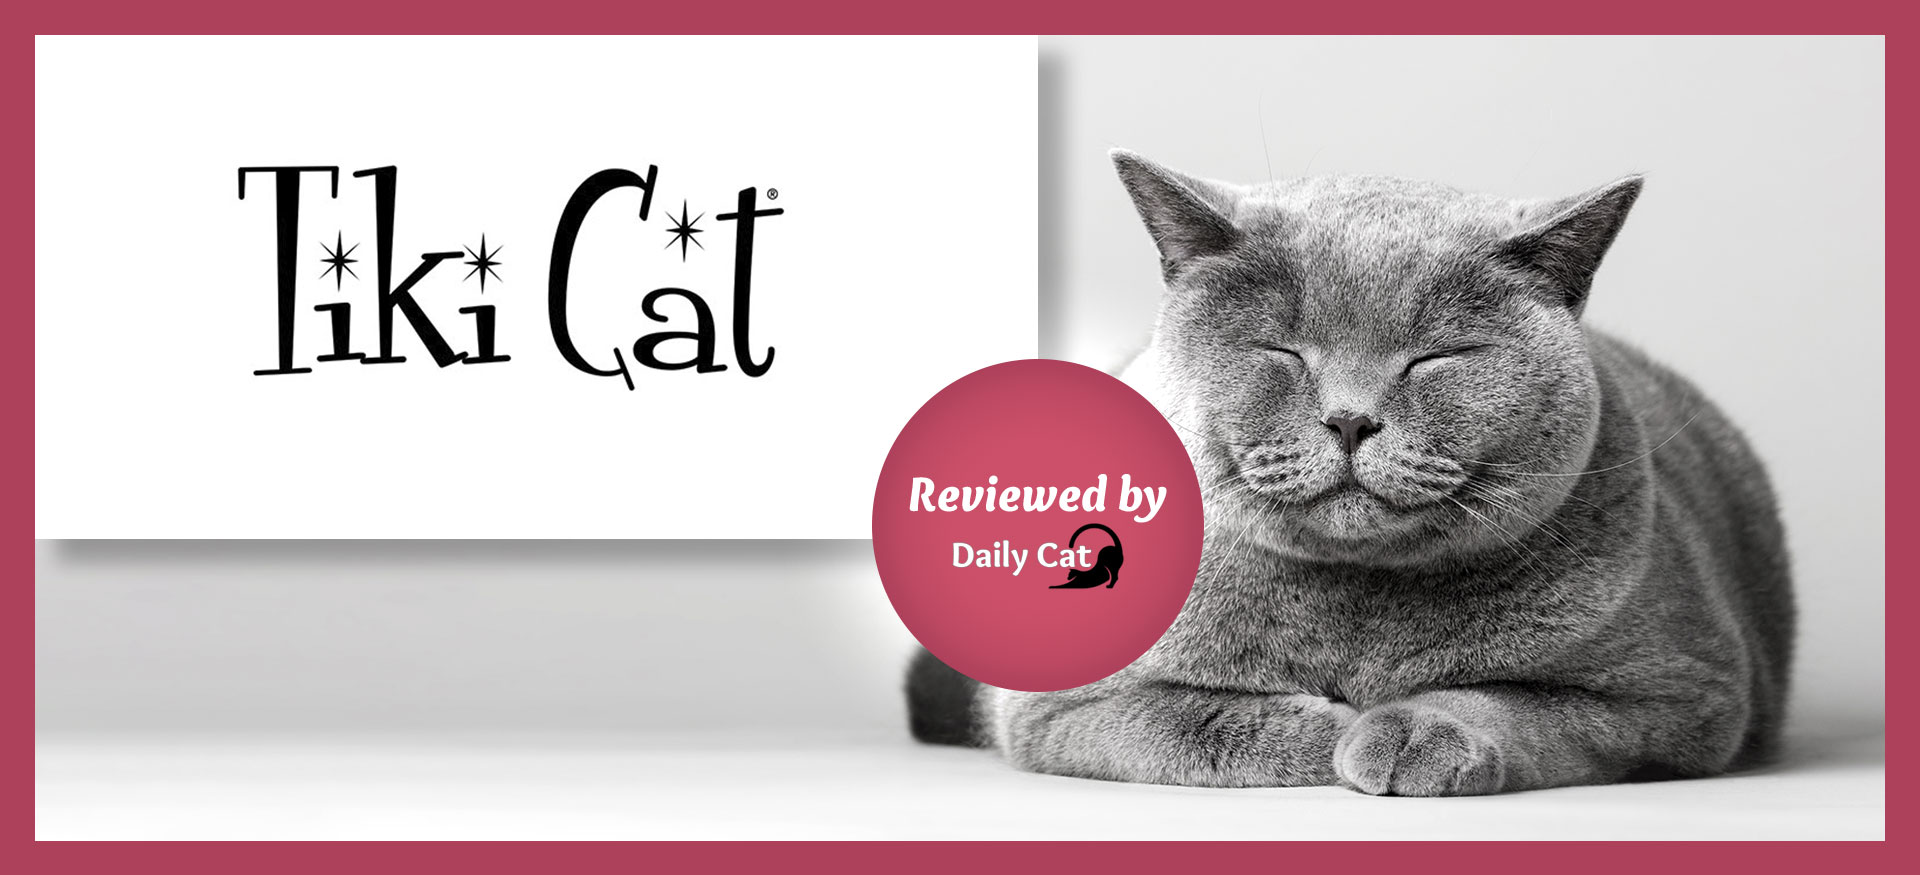 dailycat brand review tiki cat